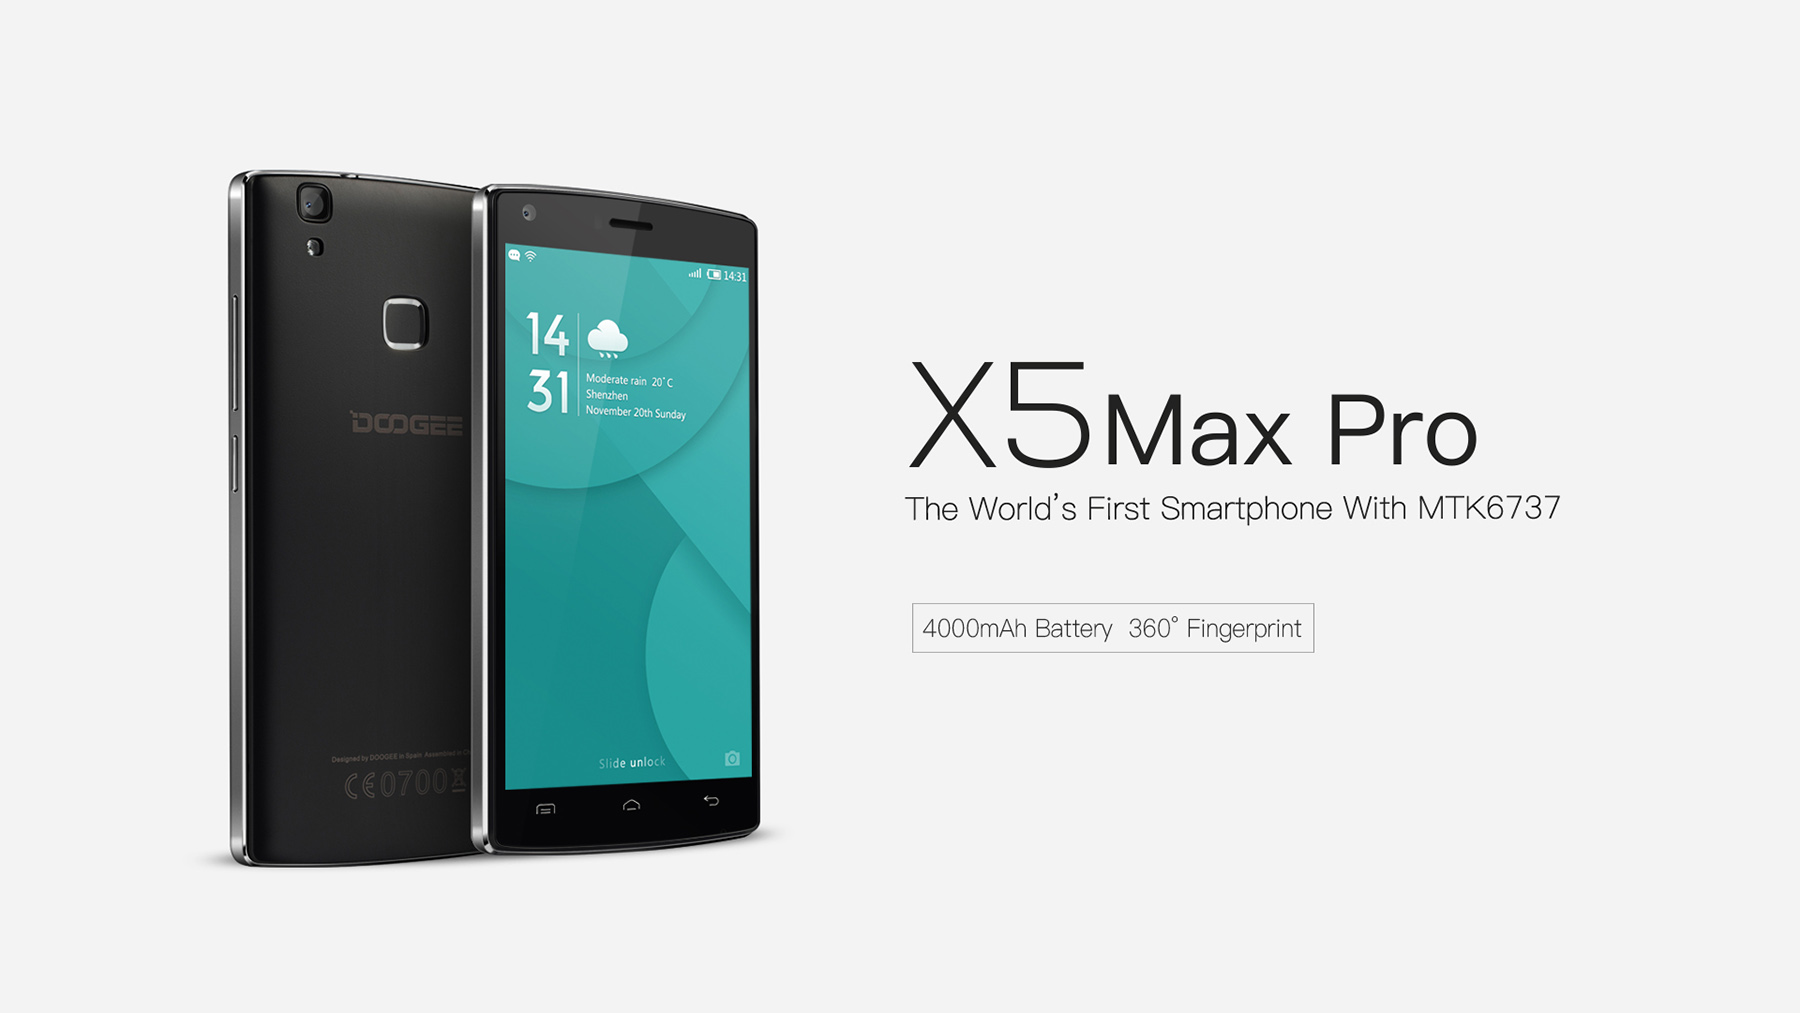 DOOGEE X5 MAX Pro 5.0 inch 4G Smartphone Android 6.0 MTK6737 Quad Core 1.3GHz 2GB RAM 16GB ROM Fingerprint Sensor Sensor Cameras Bluetooth 4.0 4000mAh Battery